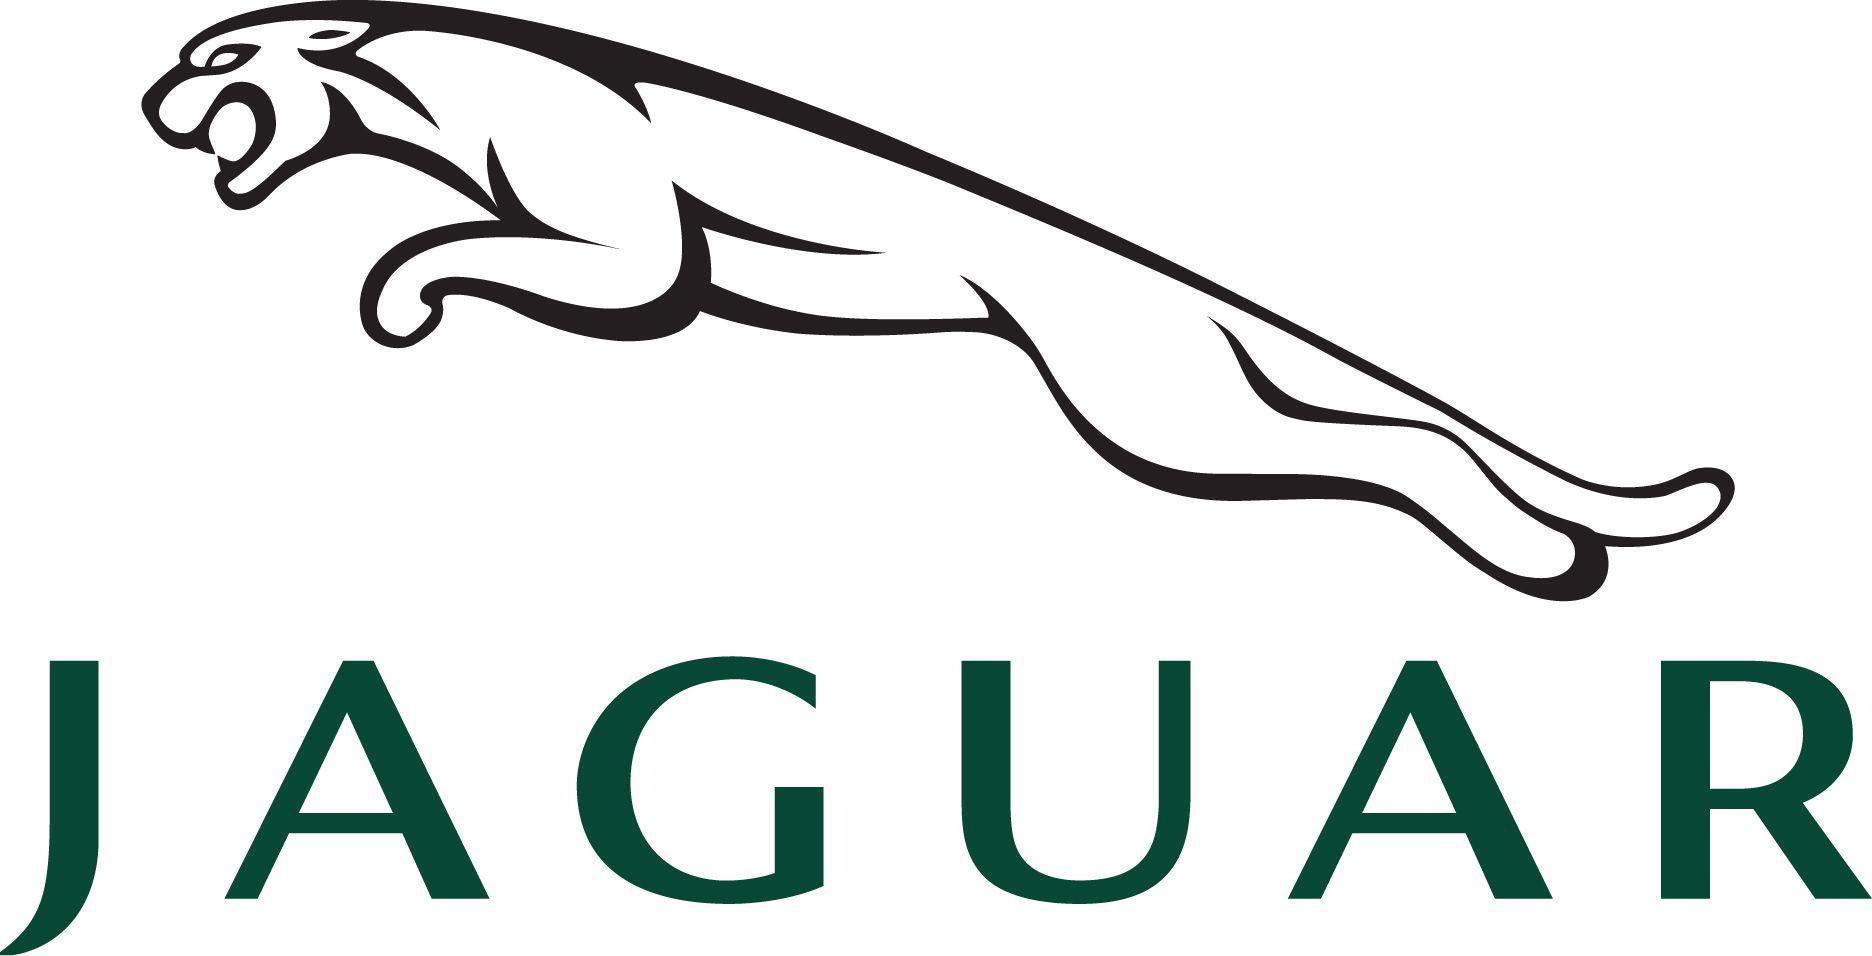 Jaguar Automotive Logo - Jaguar Logo, Jaguar Car Symbol Meaning and History | Car Brand Names.com